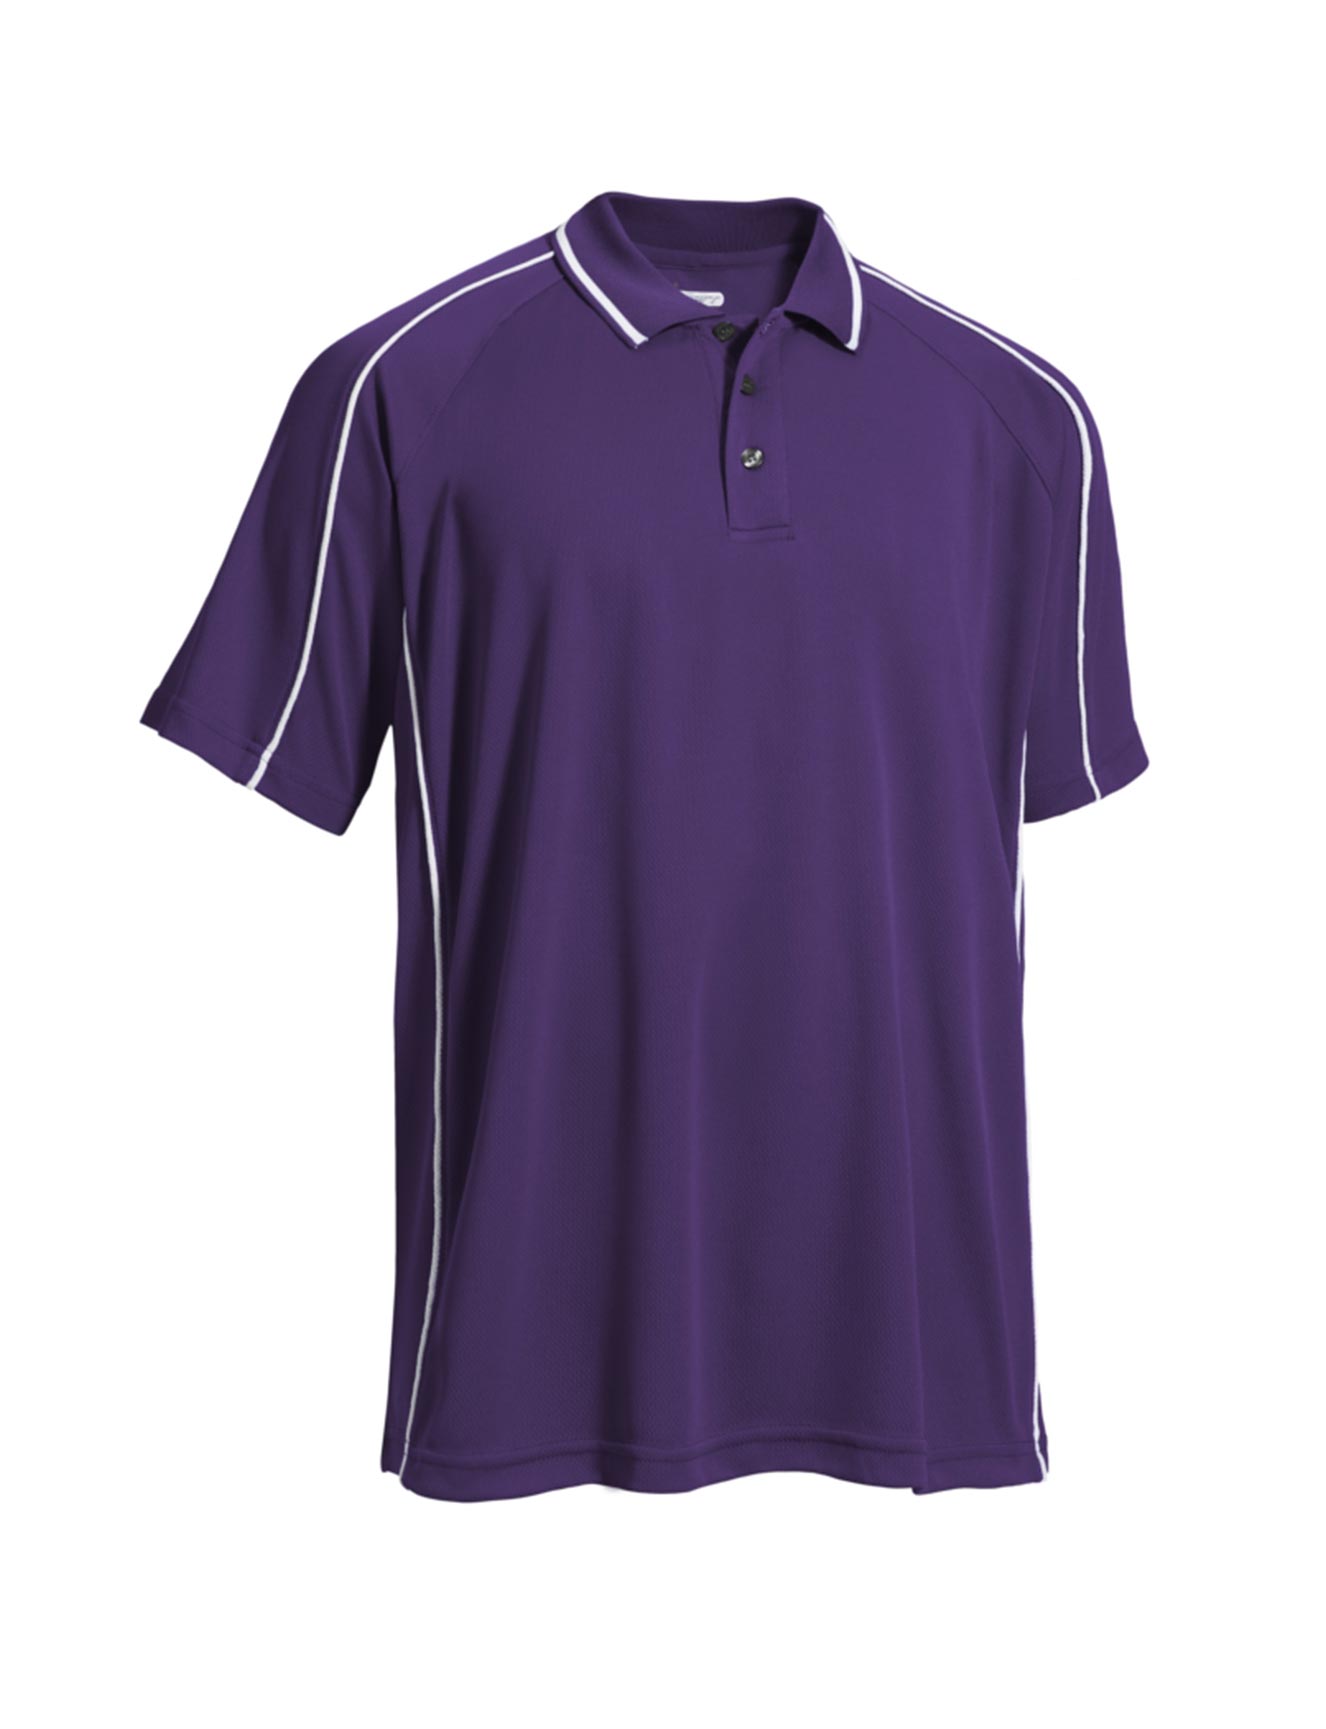 Expert Brand Wholesale Blank Activewear Men's Polo Golf Tennis Malibu Dark Purple White Piping#dark-purple